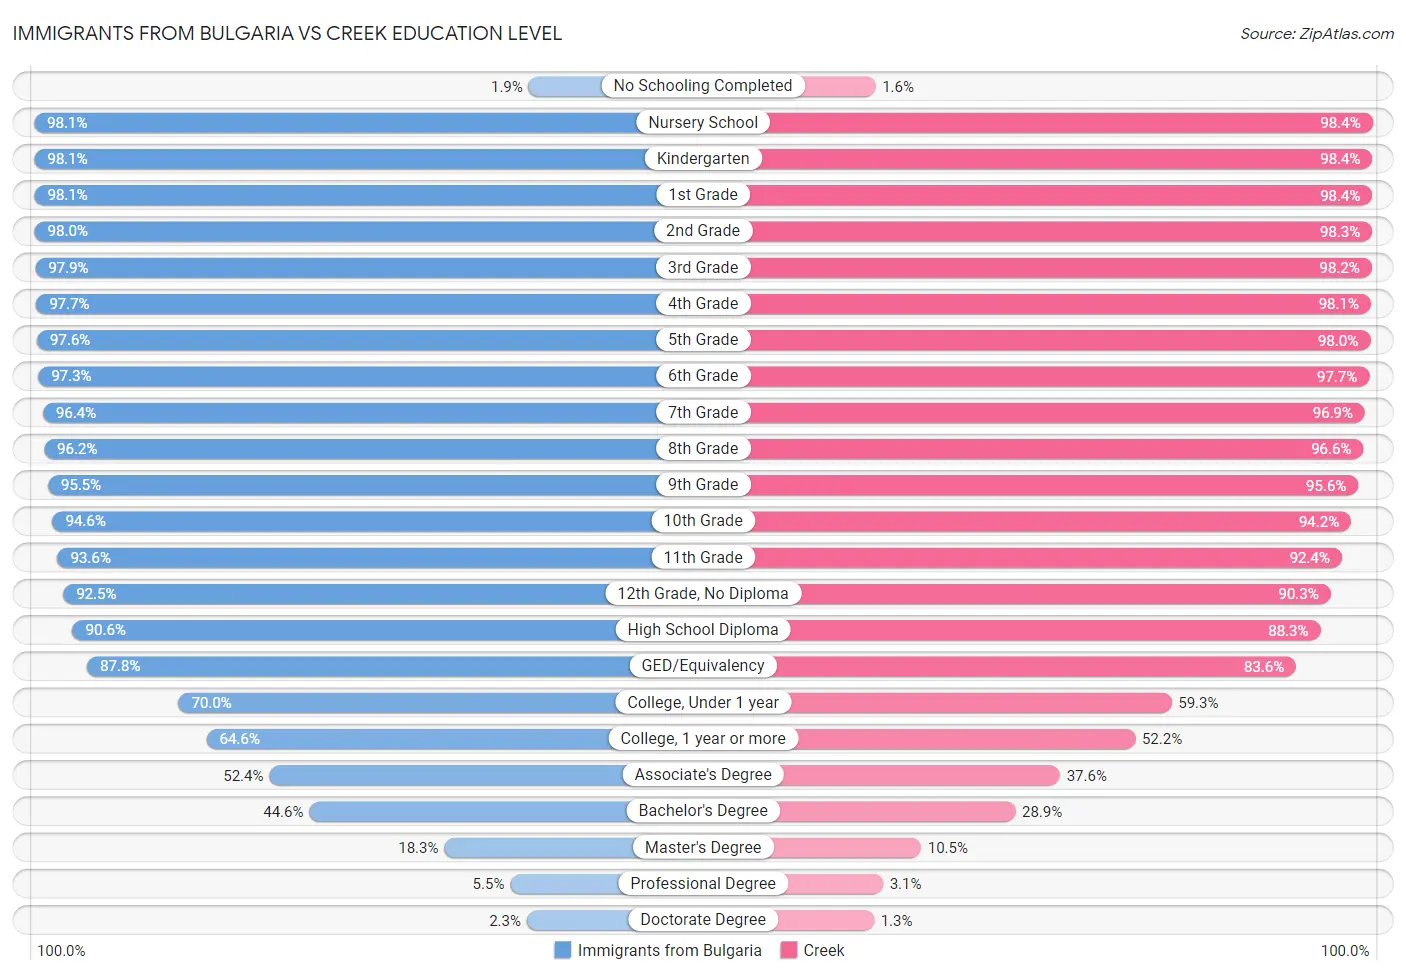 Immigrants from Bulgaria vs Creek Education Level